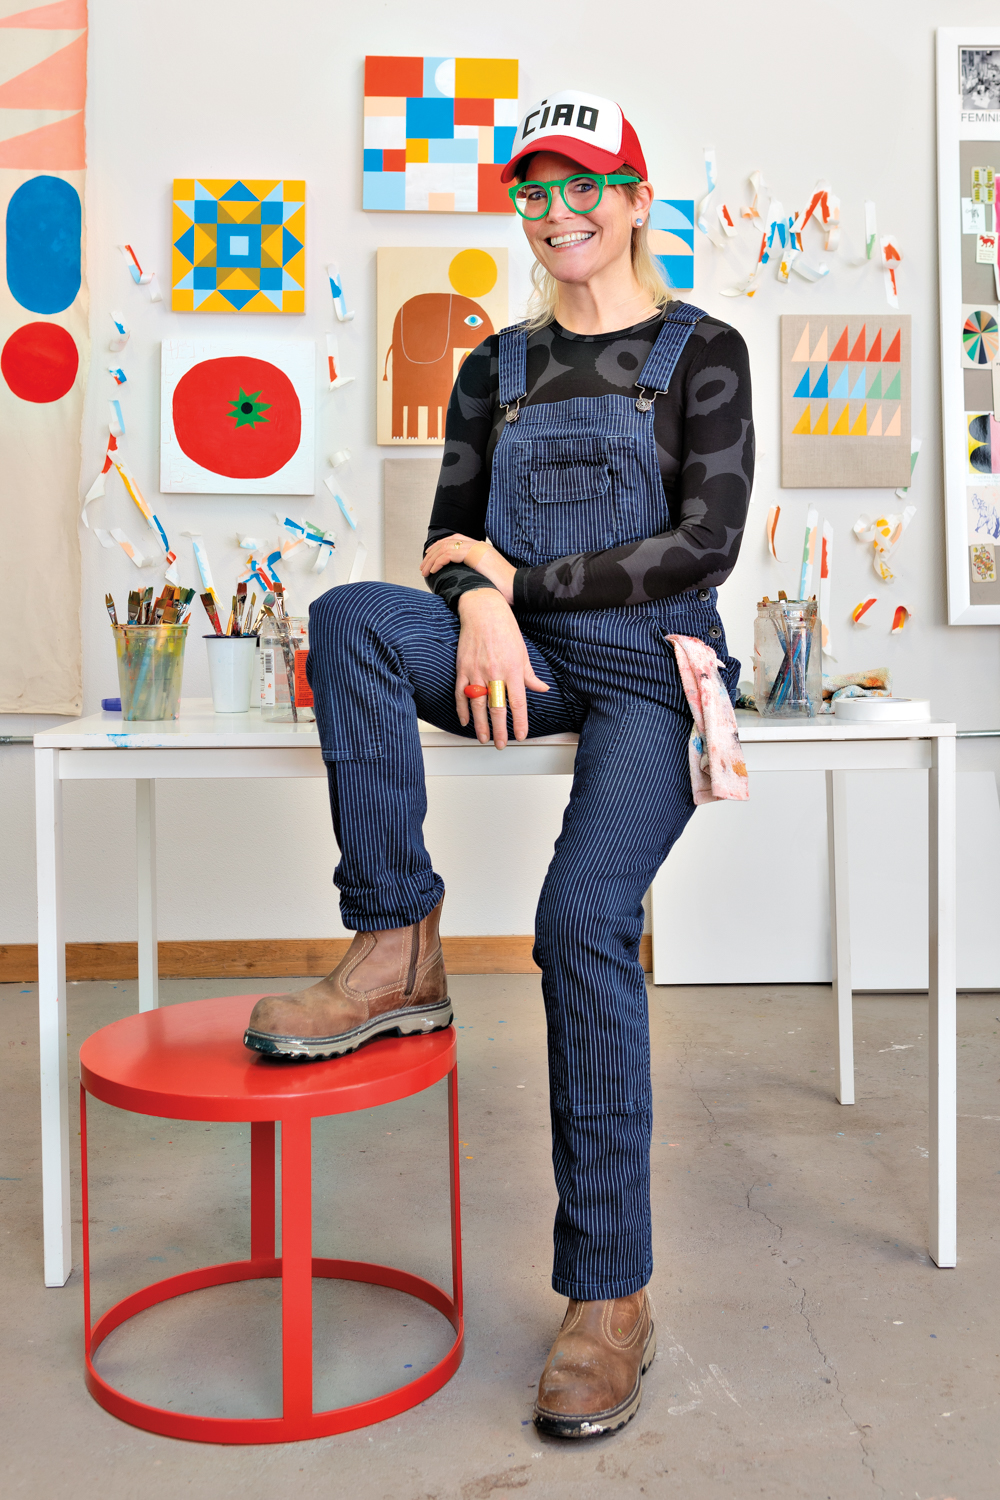 The artist poses in her Portland studio.